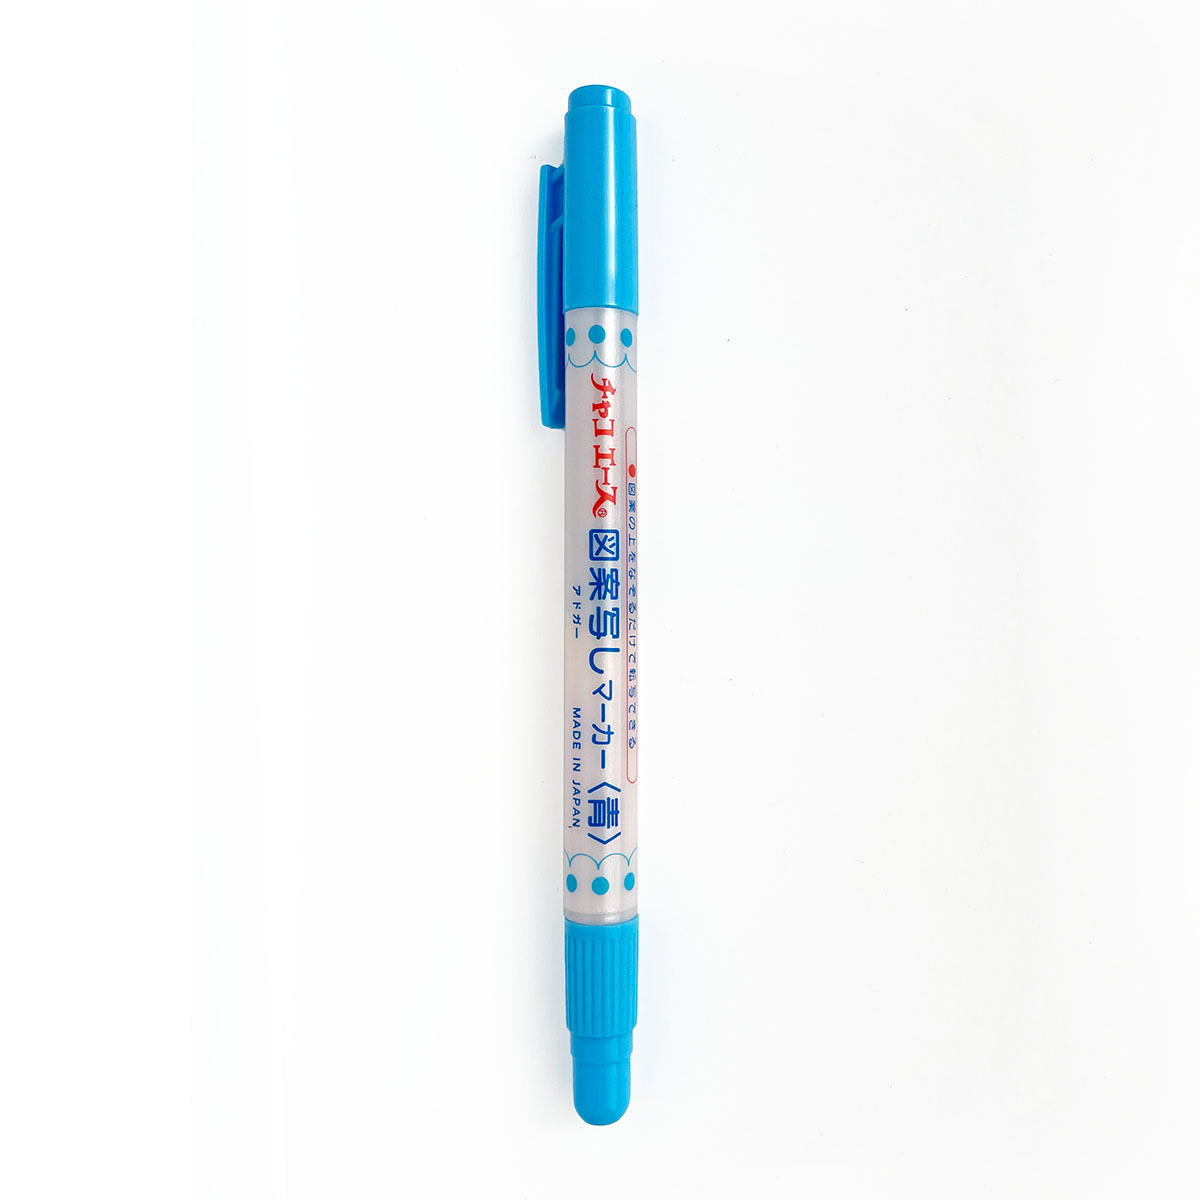 Adger water erasable marking pen